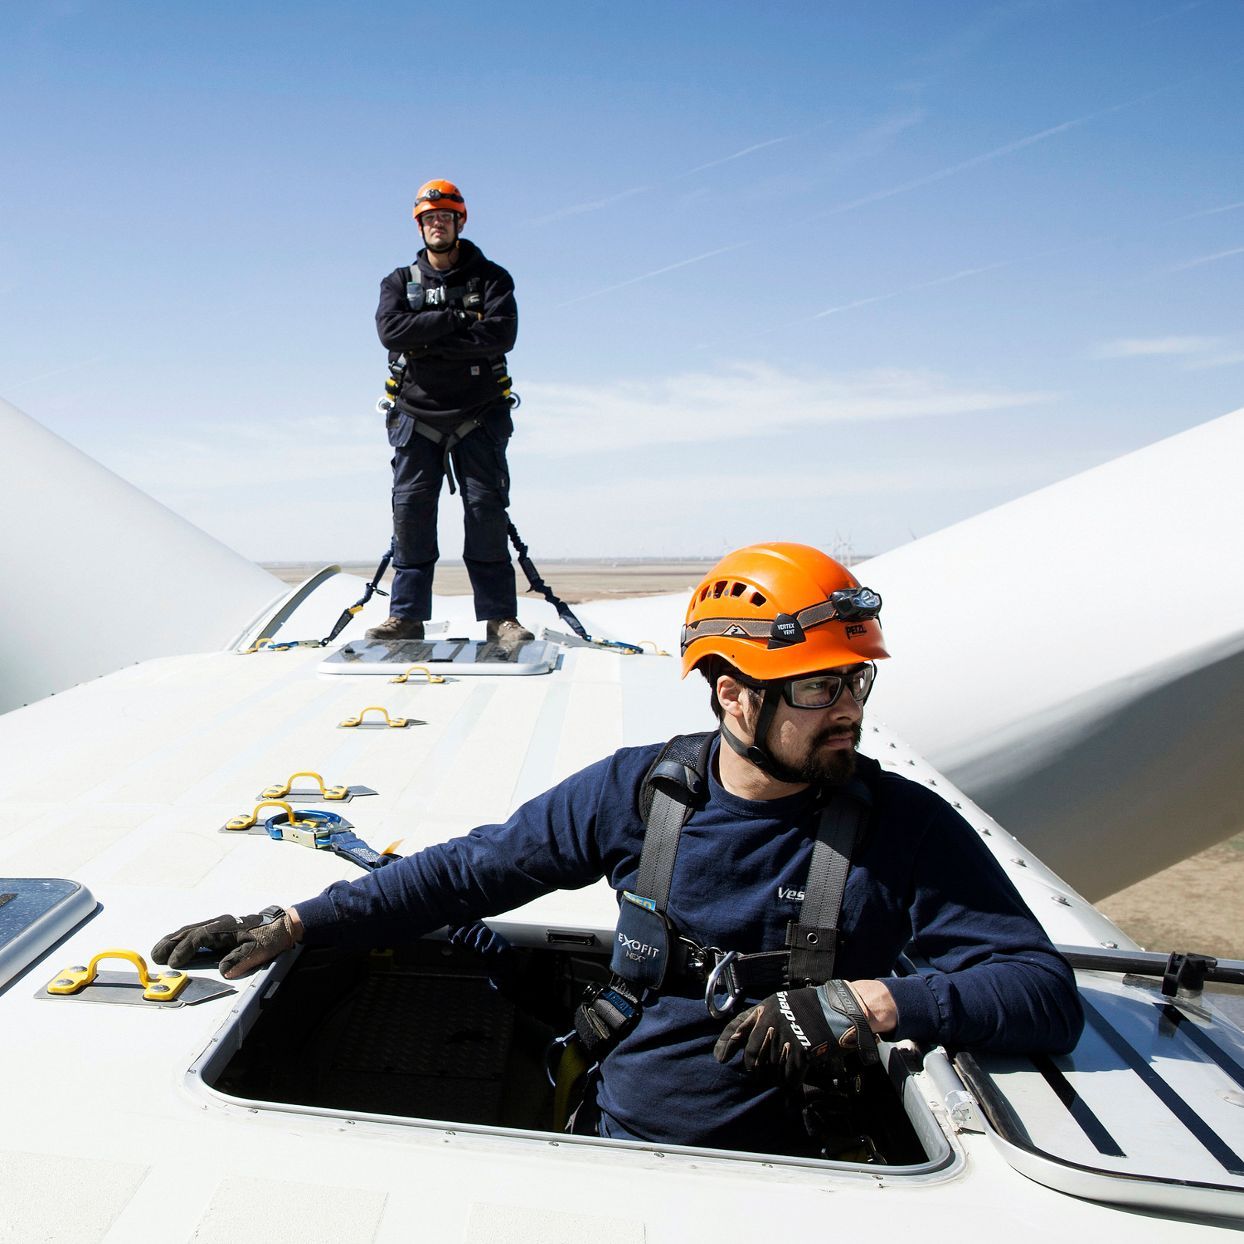 Triodos Renewables Europe Fund